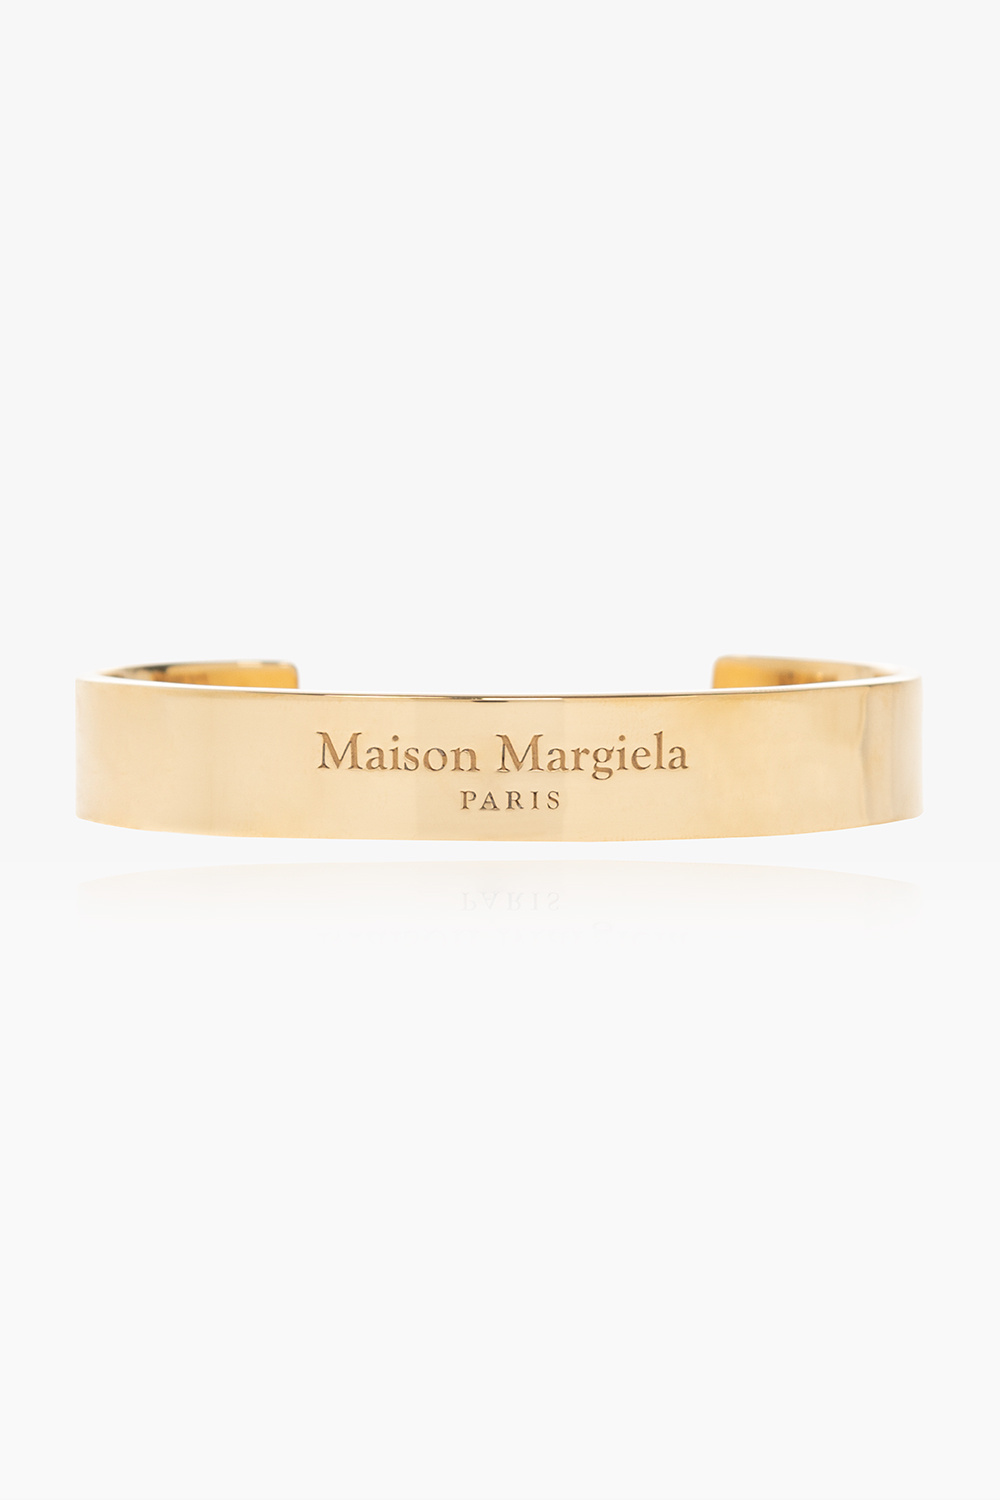 Maison Margiela Follow Us: On Various Platforms